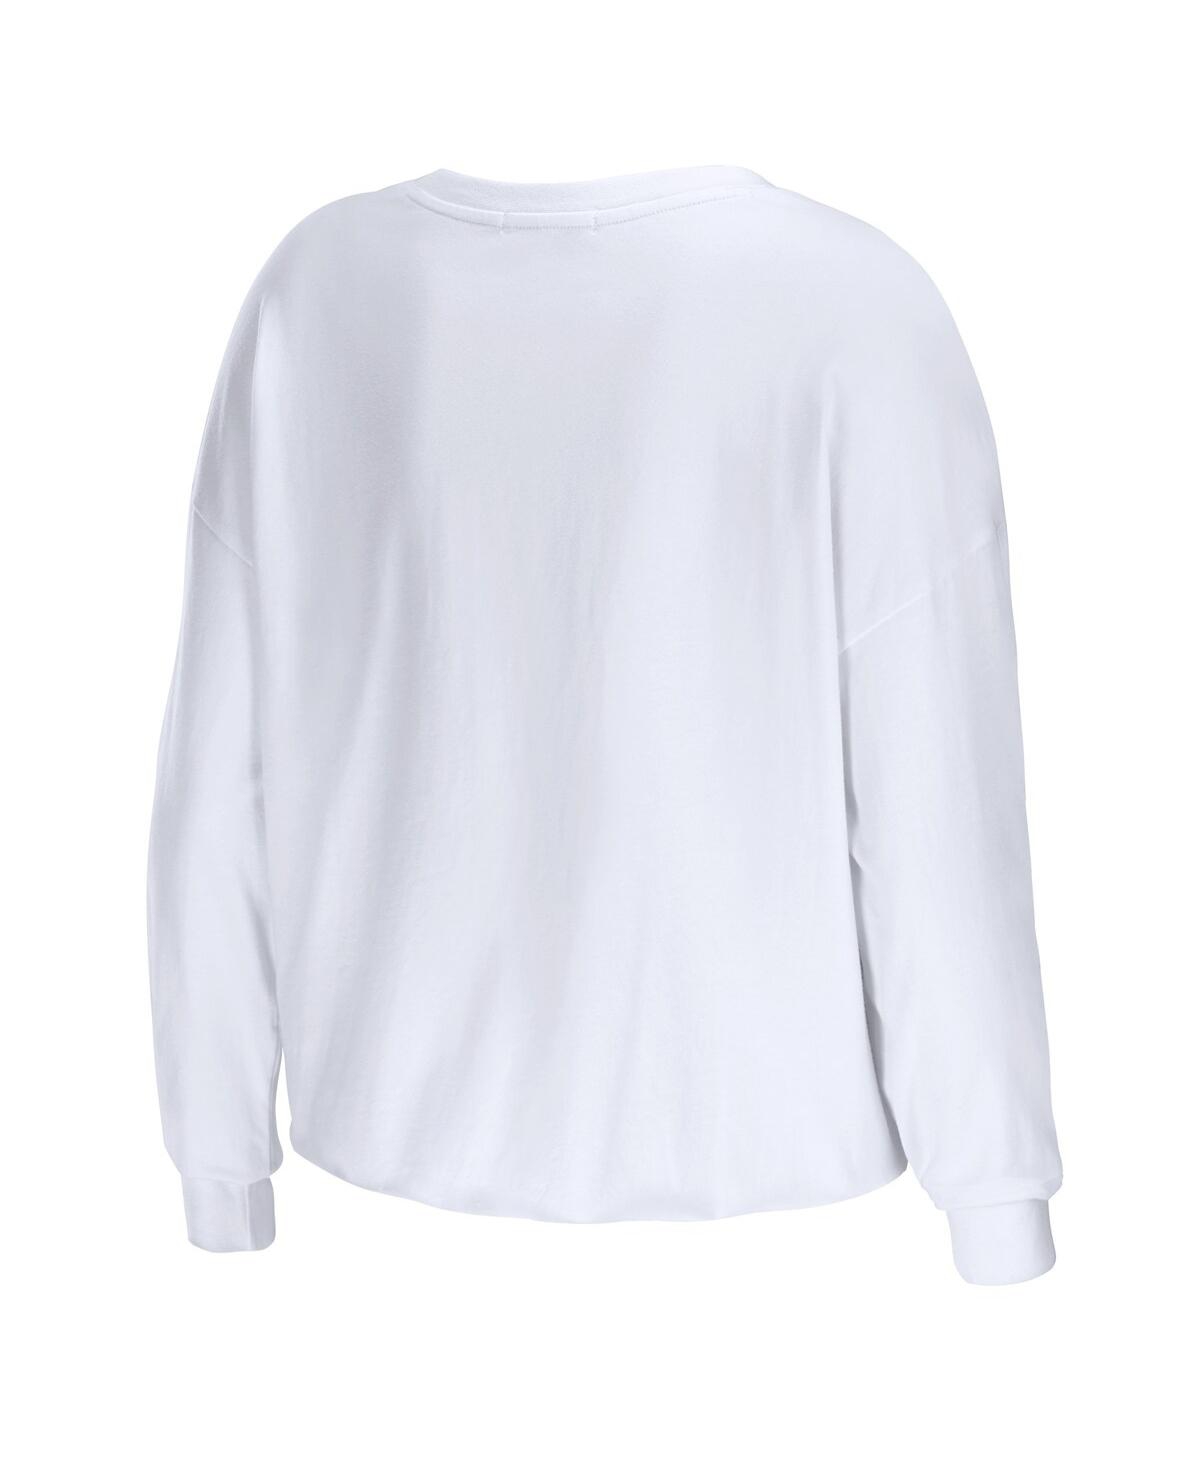 Shop Wear By Erin Andrews Women's  White Texas Longhorns Diamond Long Sleeve Cropped T-shirt